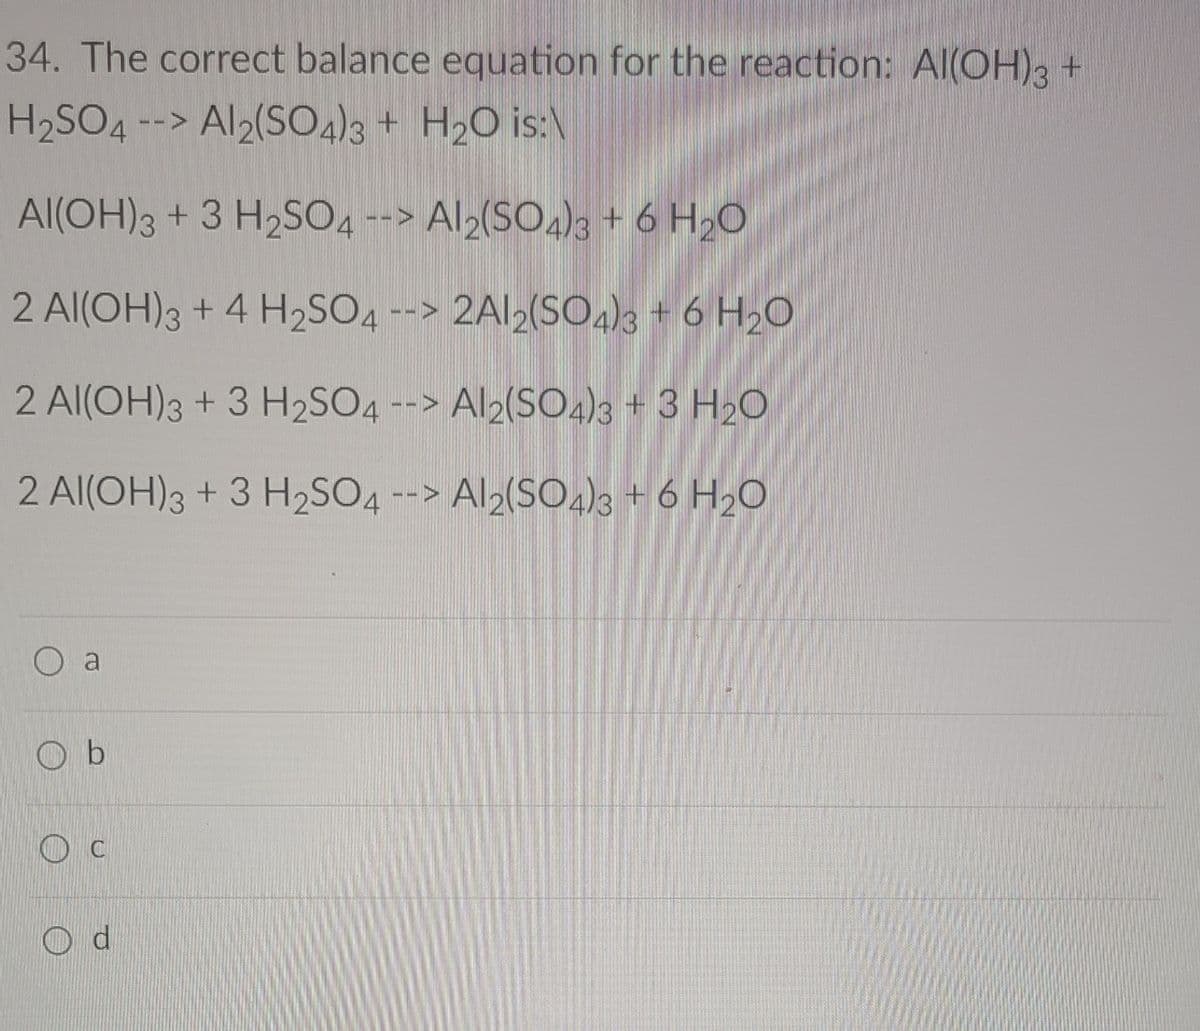 34. The correct balance equation for the reaction: Al(OH)3 +
H2SO4 --> Al2(S04)3 + H2O is:\
Al(OH)3 + 3 H2SO4 --> Al2(SO,)3 + 6 H,0
2 Al(OH)3 + 4 H2SO4 --> 2AI2(SO4)3 + 6 H2O
2 Al(OH)3 + 3 H2SO4 --> Al2(SO4)s + 3 H20
2 Al(OH)3 + 3 H2SO4 --> Al2(SO4)3 + 6 H20
O a
O b
O c
O d
